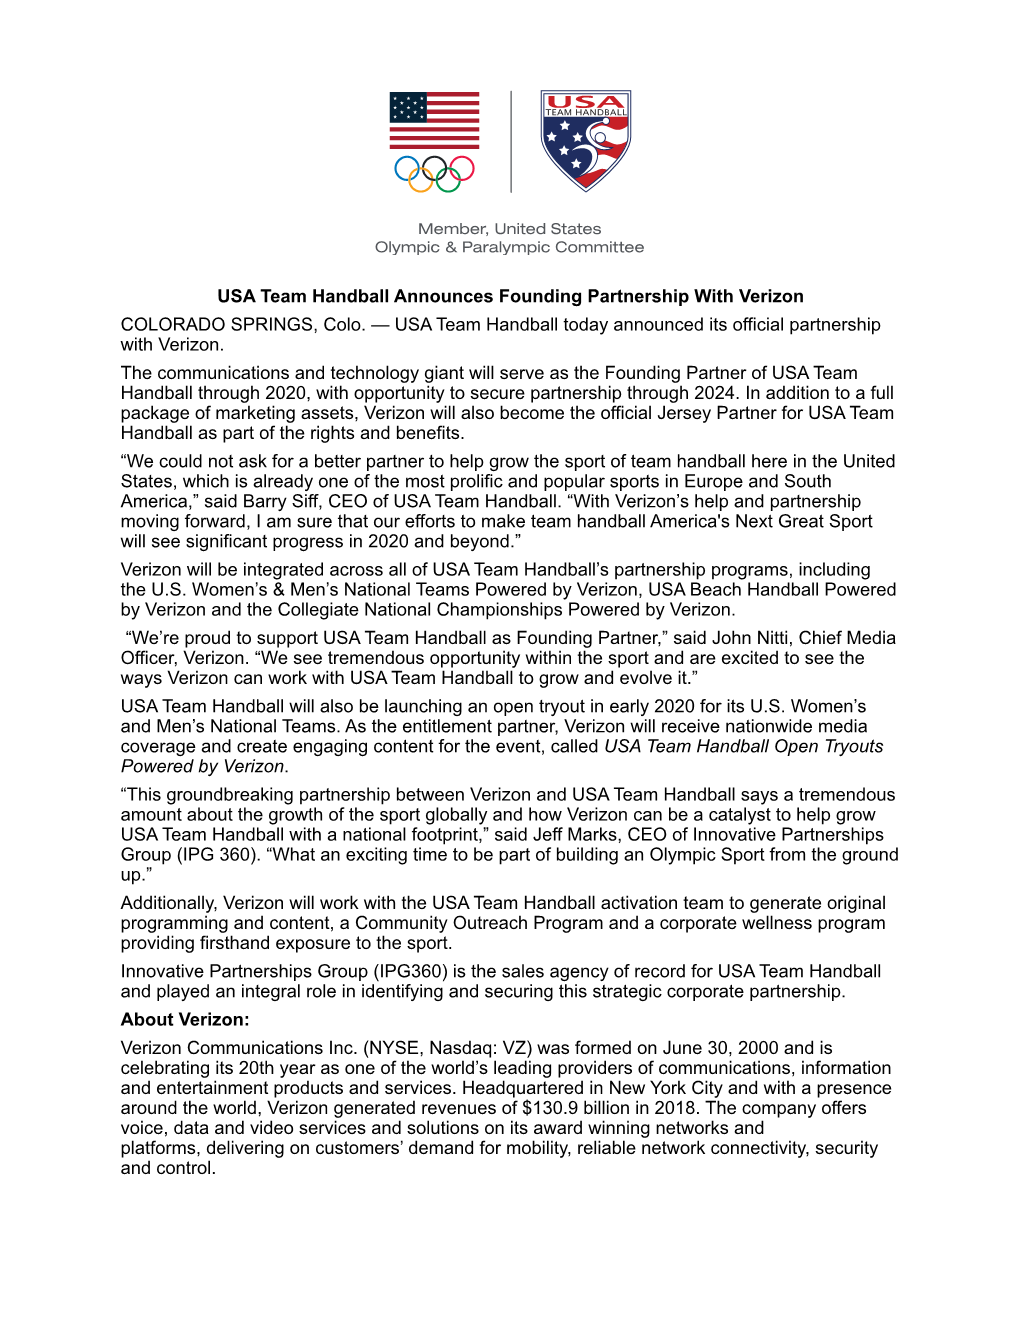 USA Team Handball Announces Founding Partnership with Verizon COLORADO SPRINGS, Colo